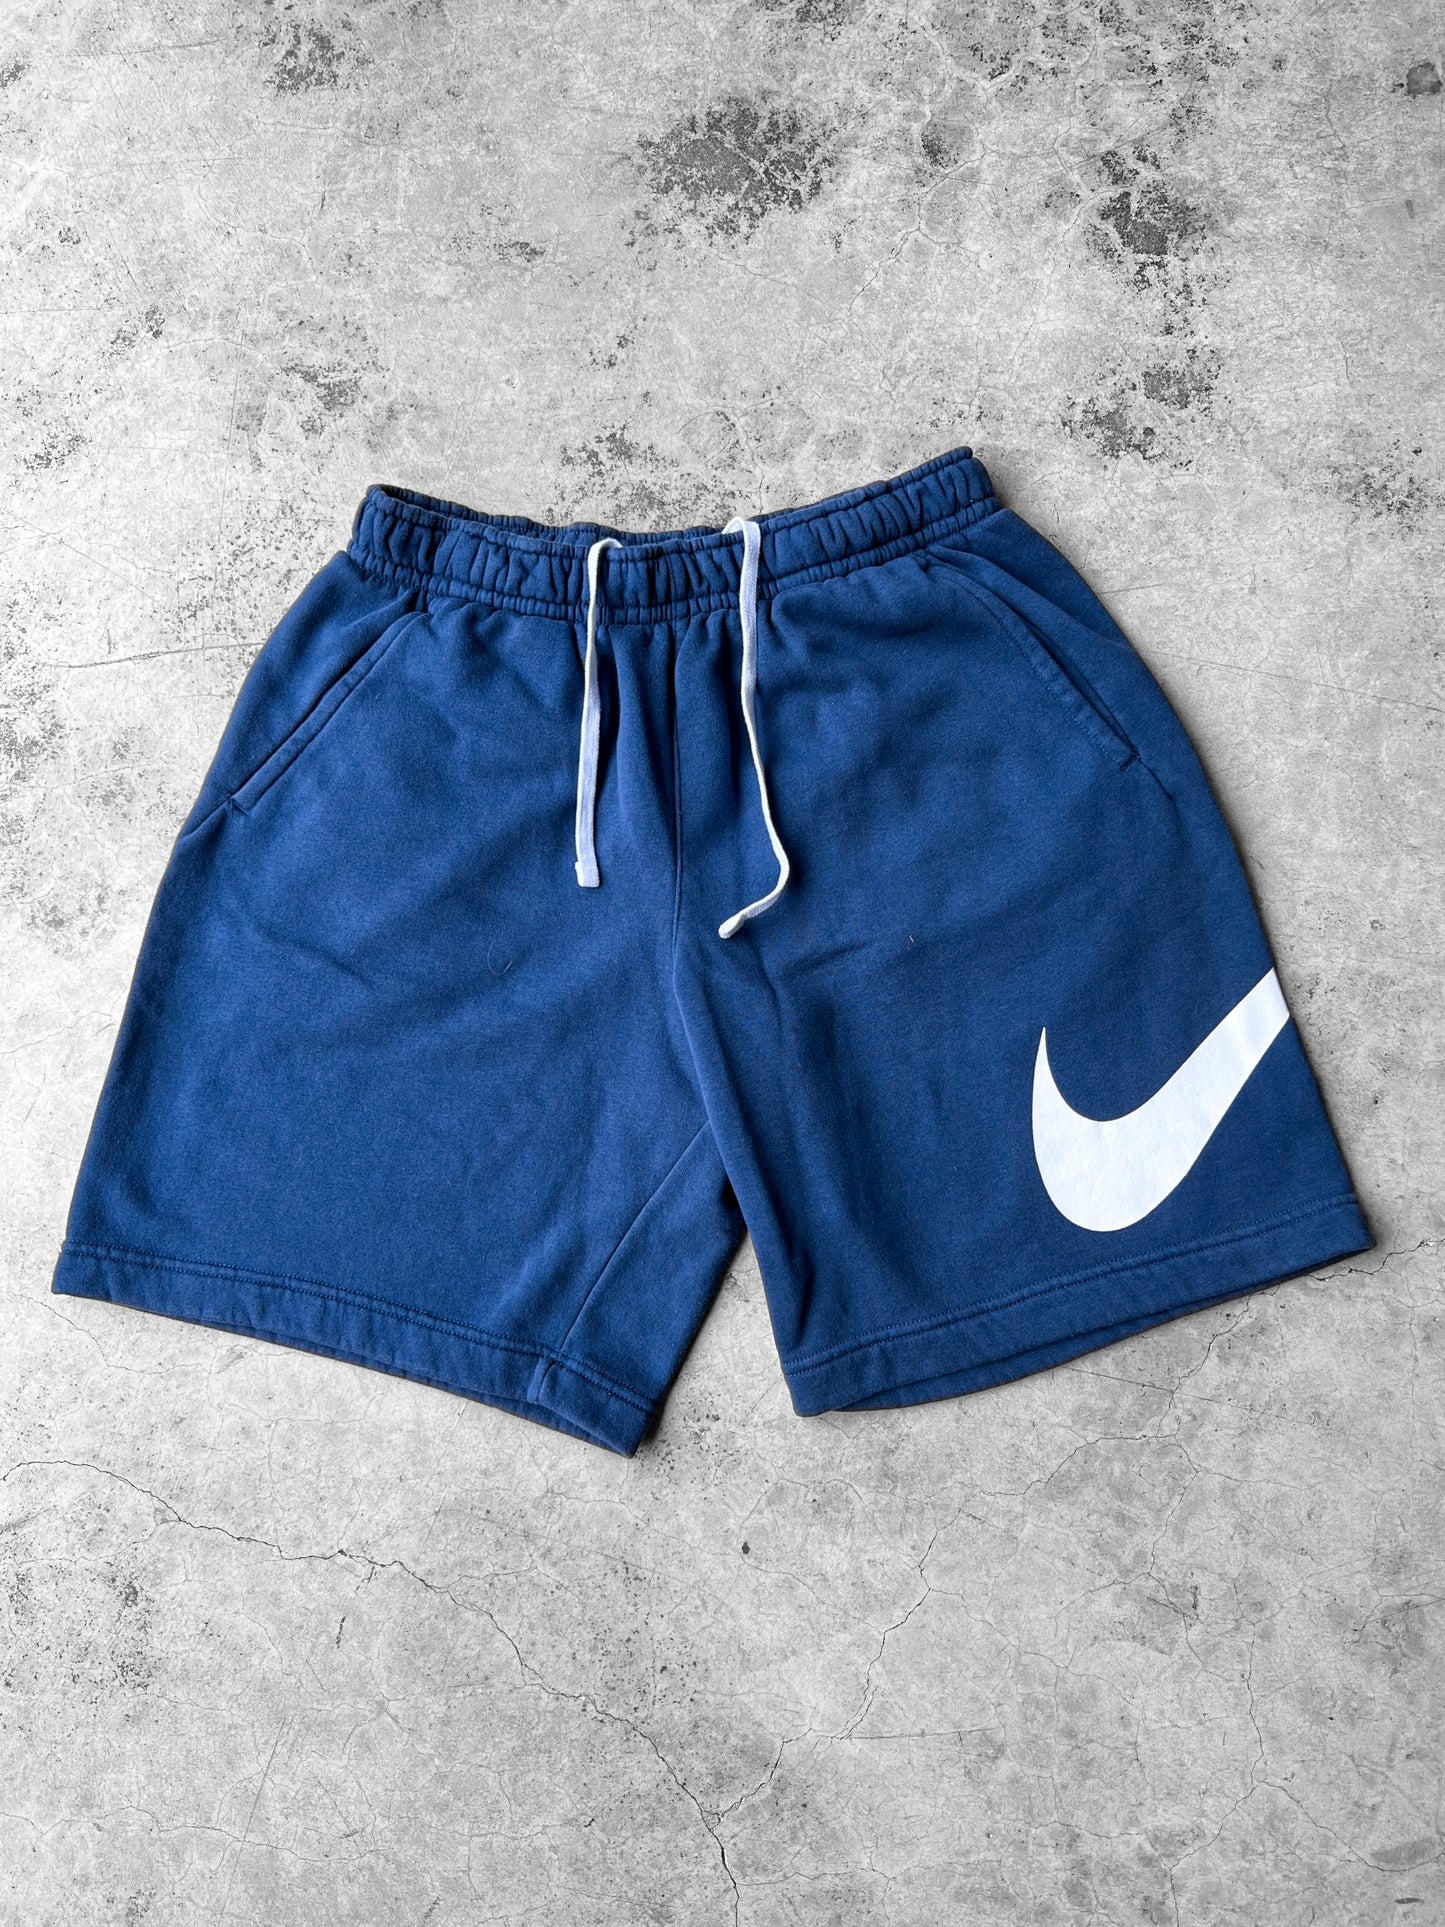 Nike Swoosh Sweat Shorts - M